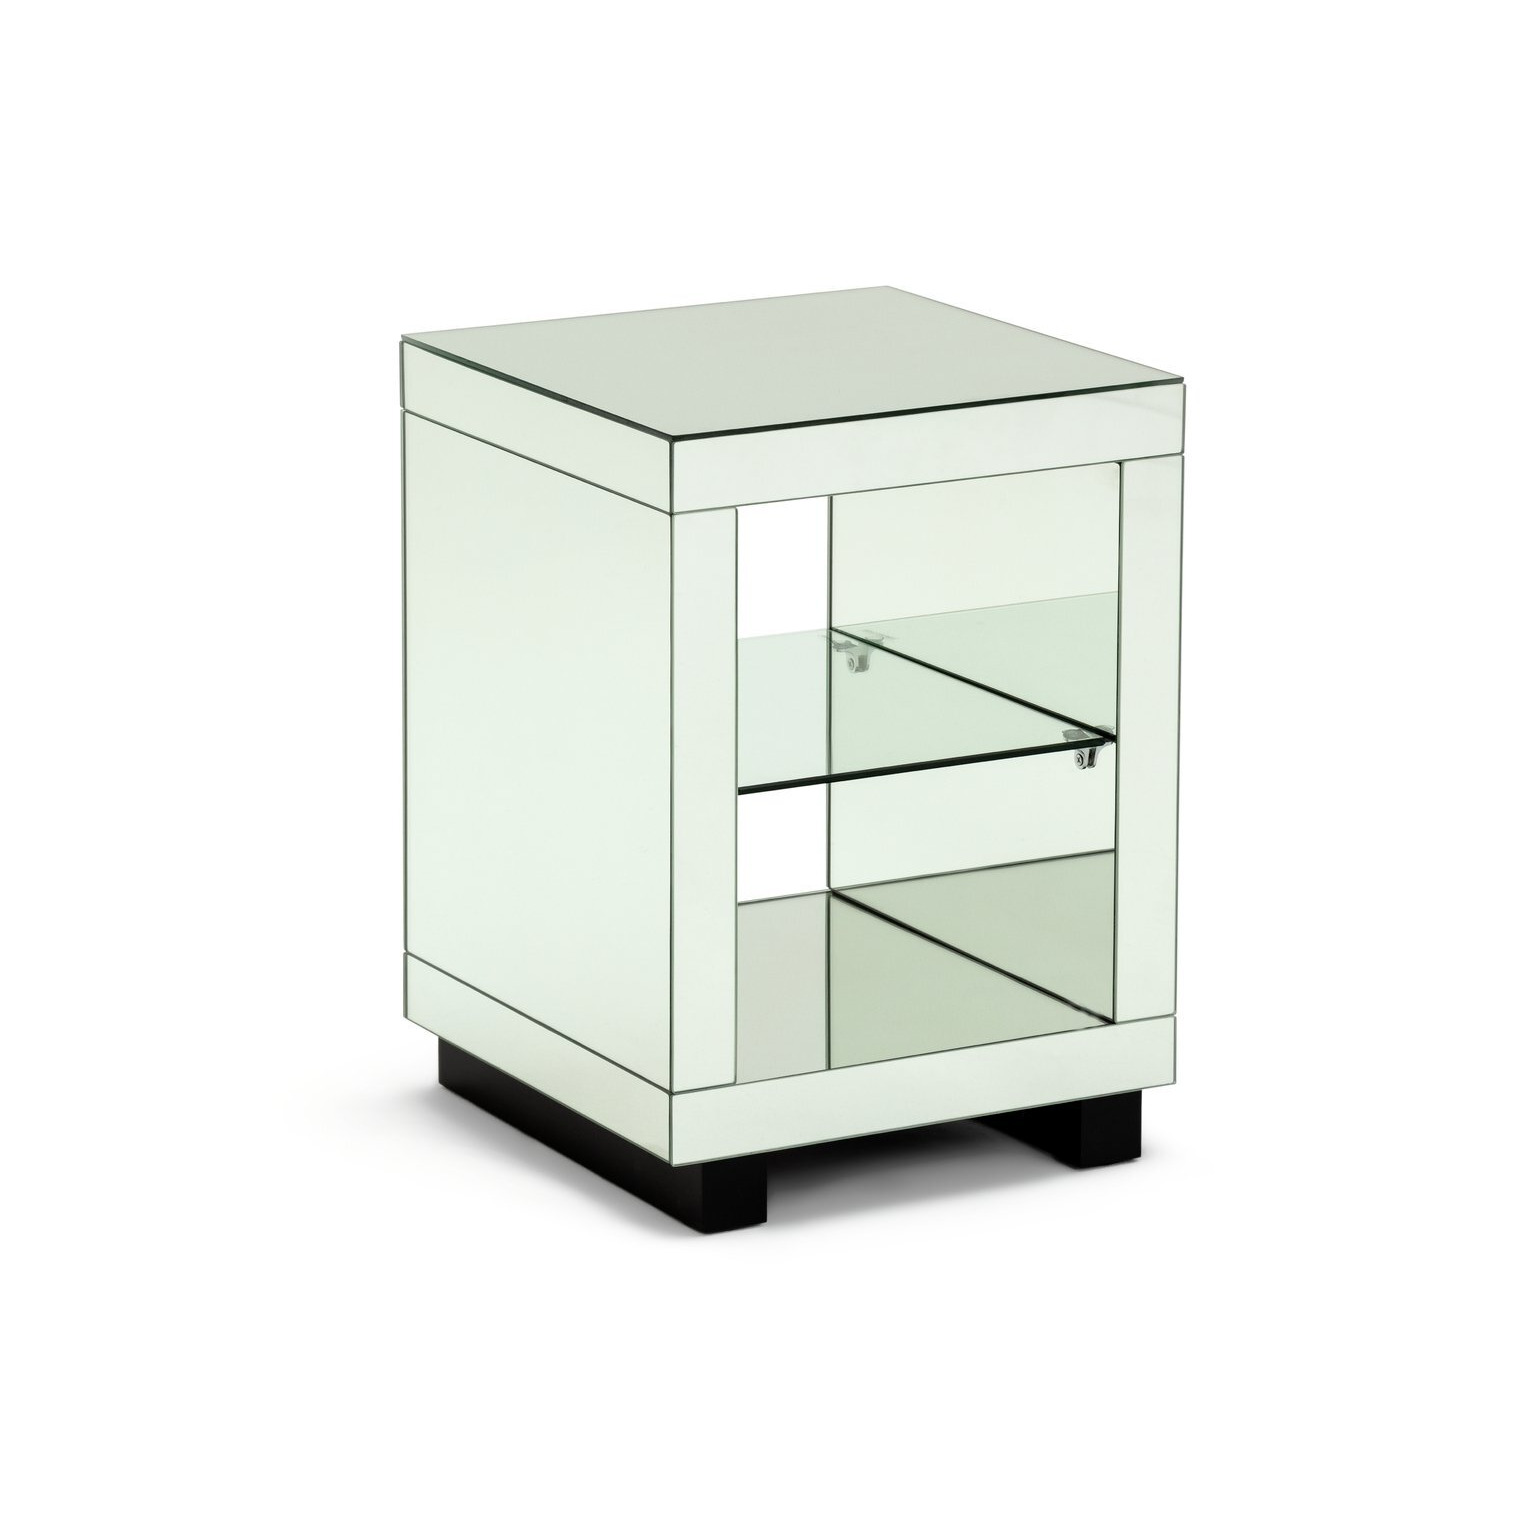 Habitat Sylvie Side Table - Mirrored - image 1